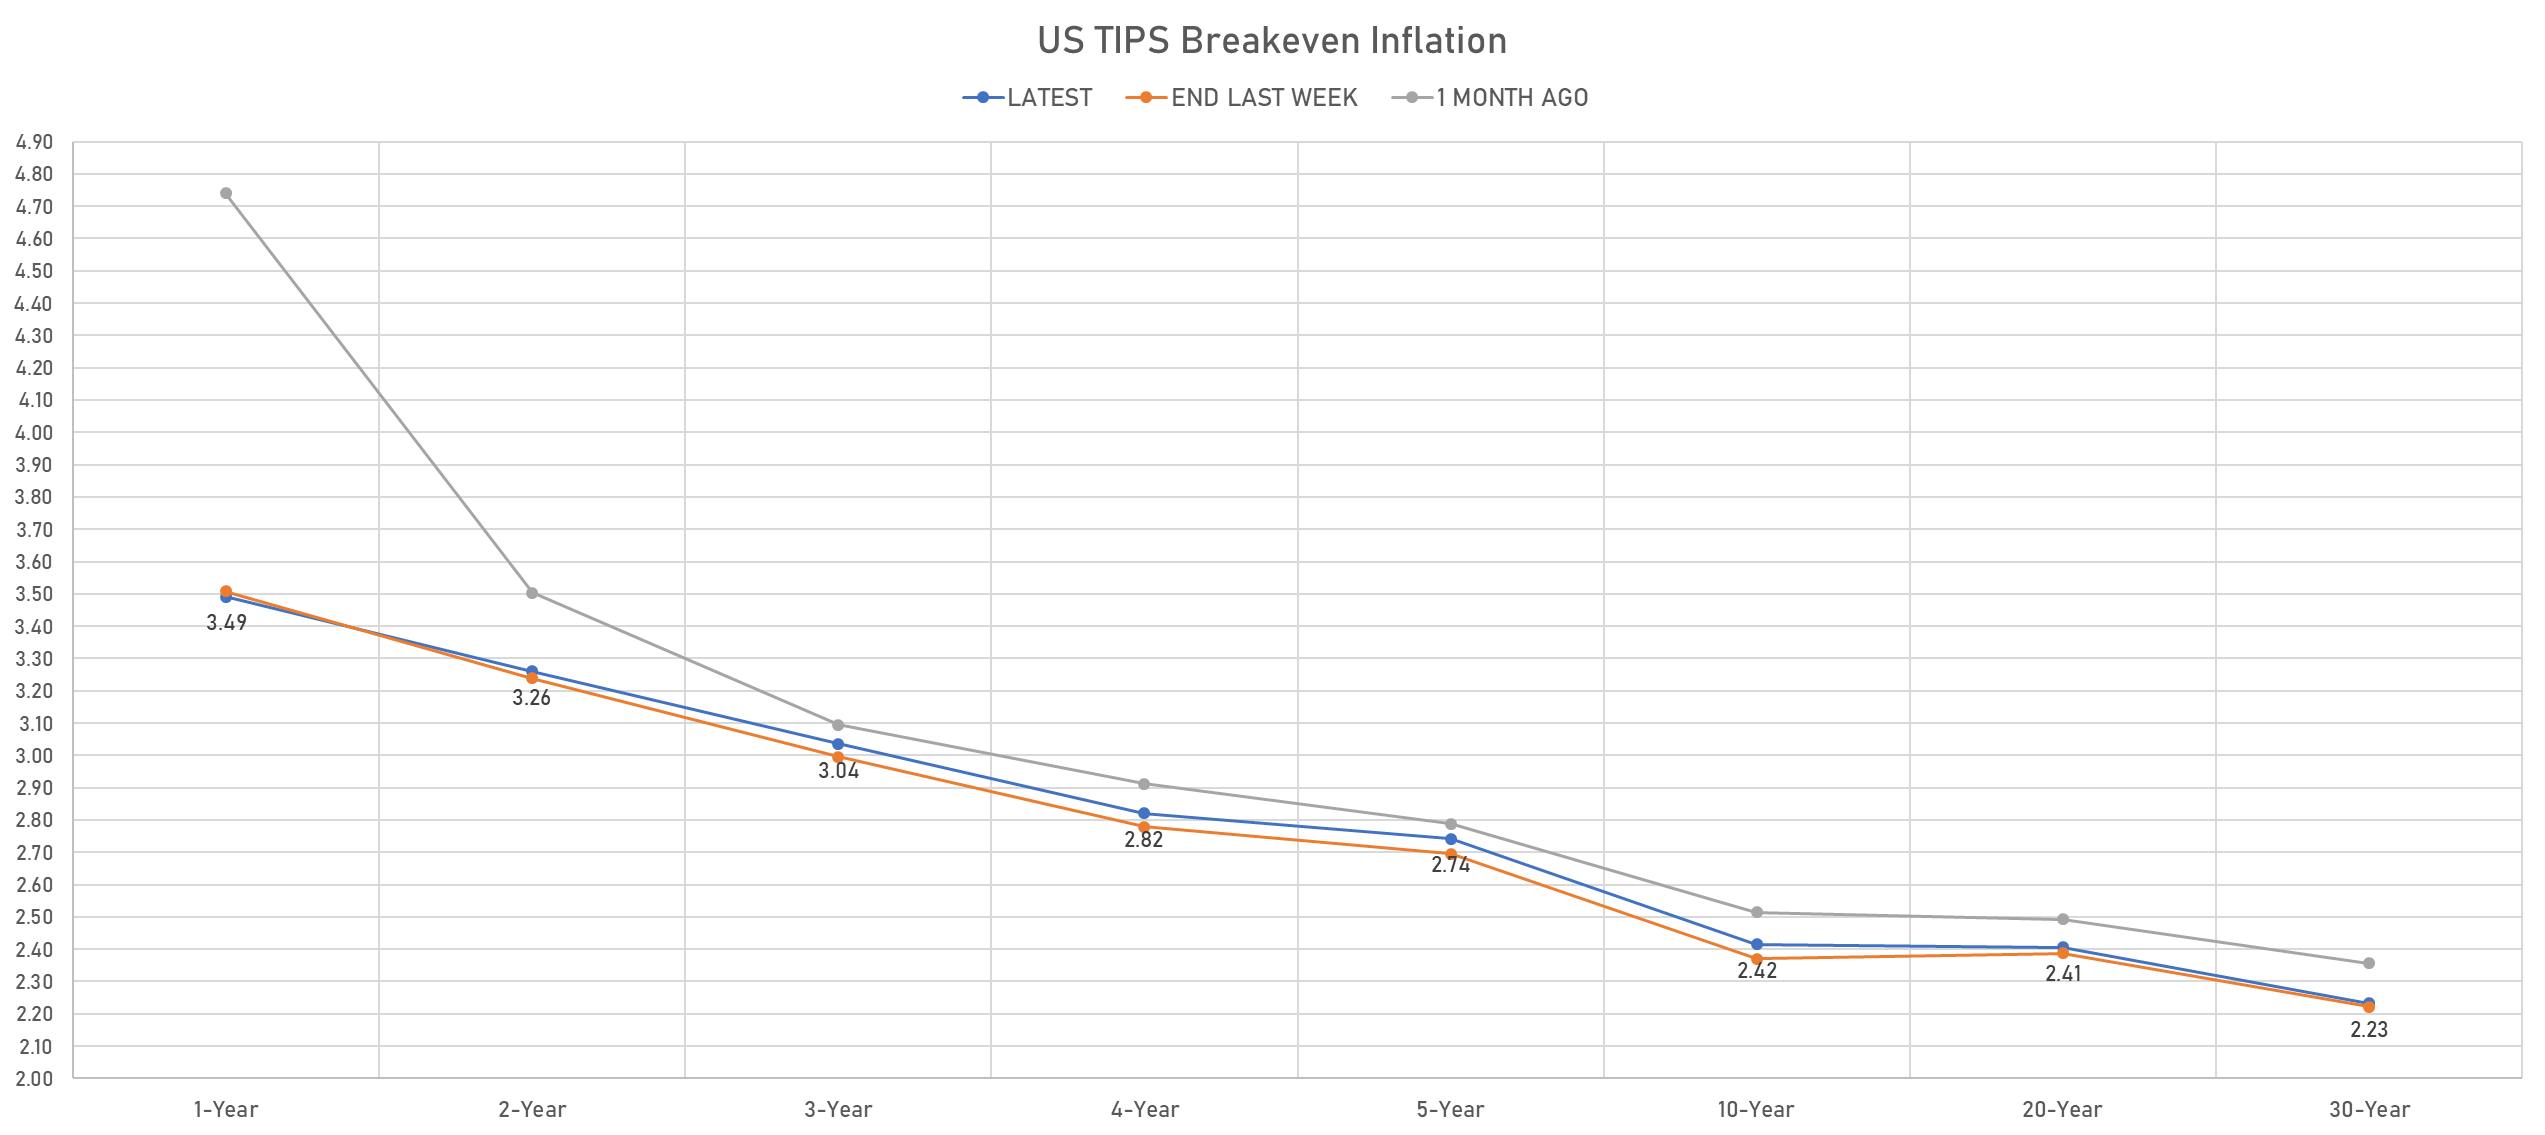 TIPS Breakevens | Sources: phipost.com, Refinitiv data